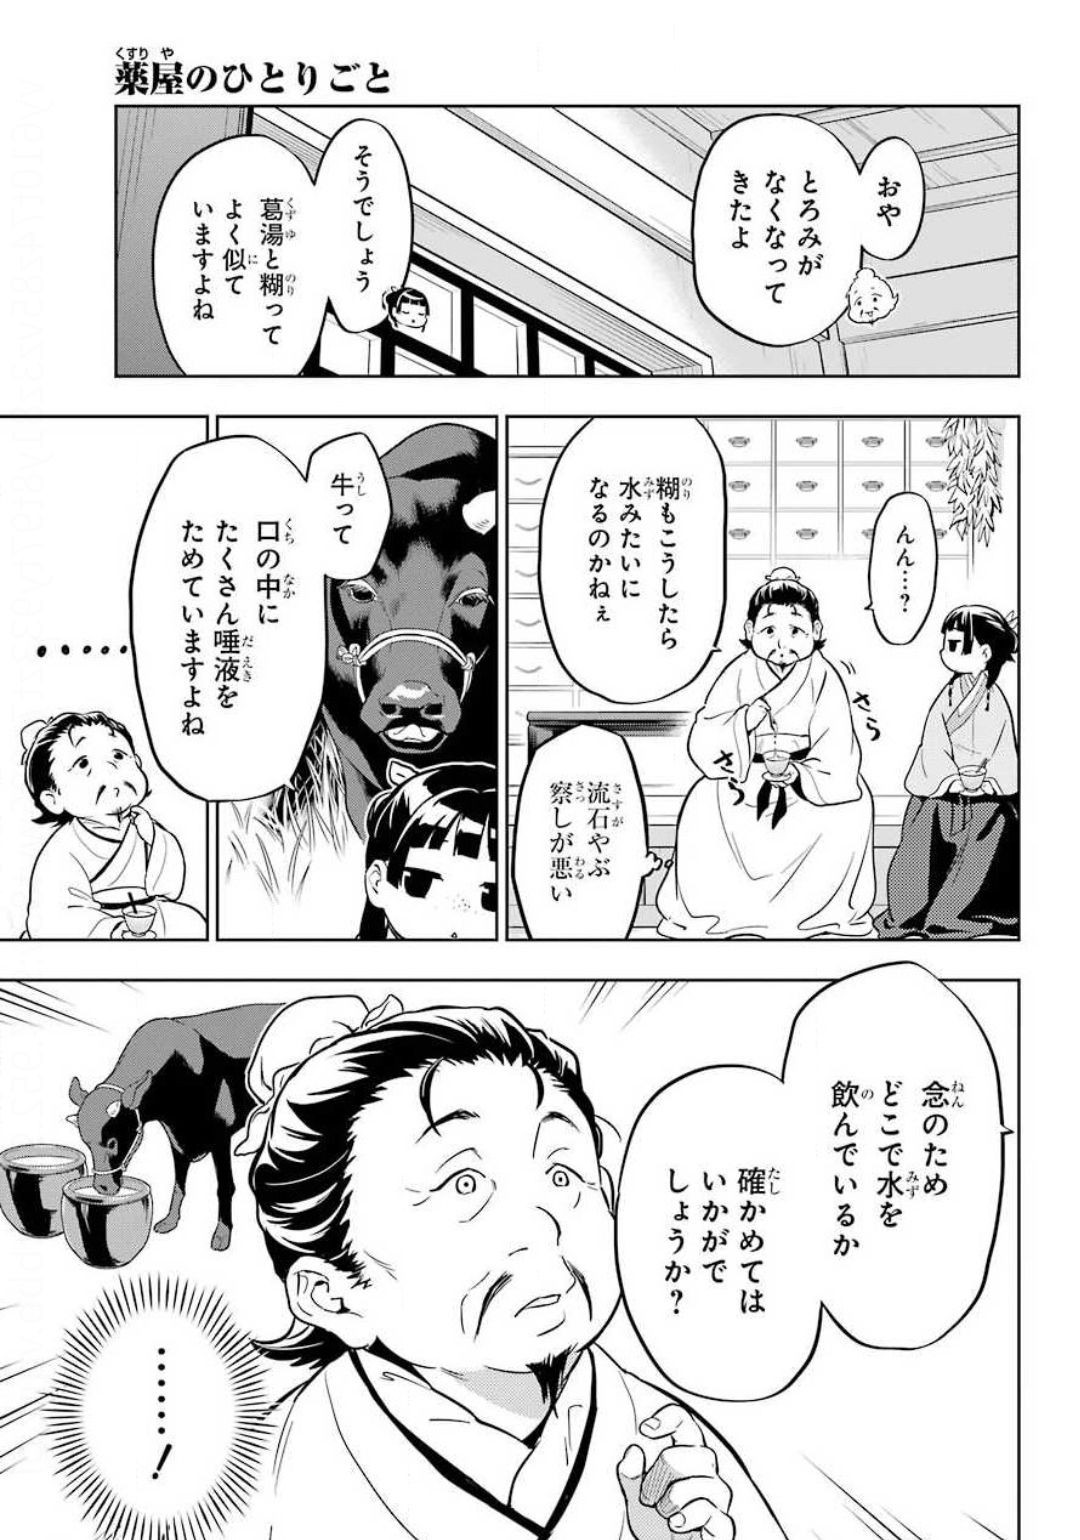 Kusuriya no Hitorigoto - Chapter 35-1 - Page 20